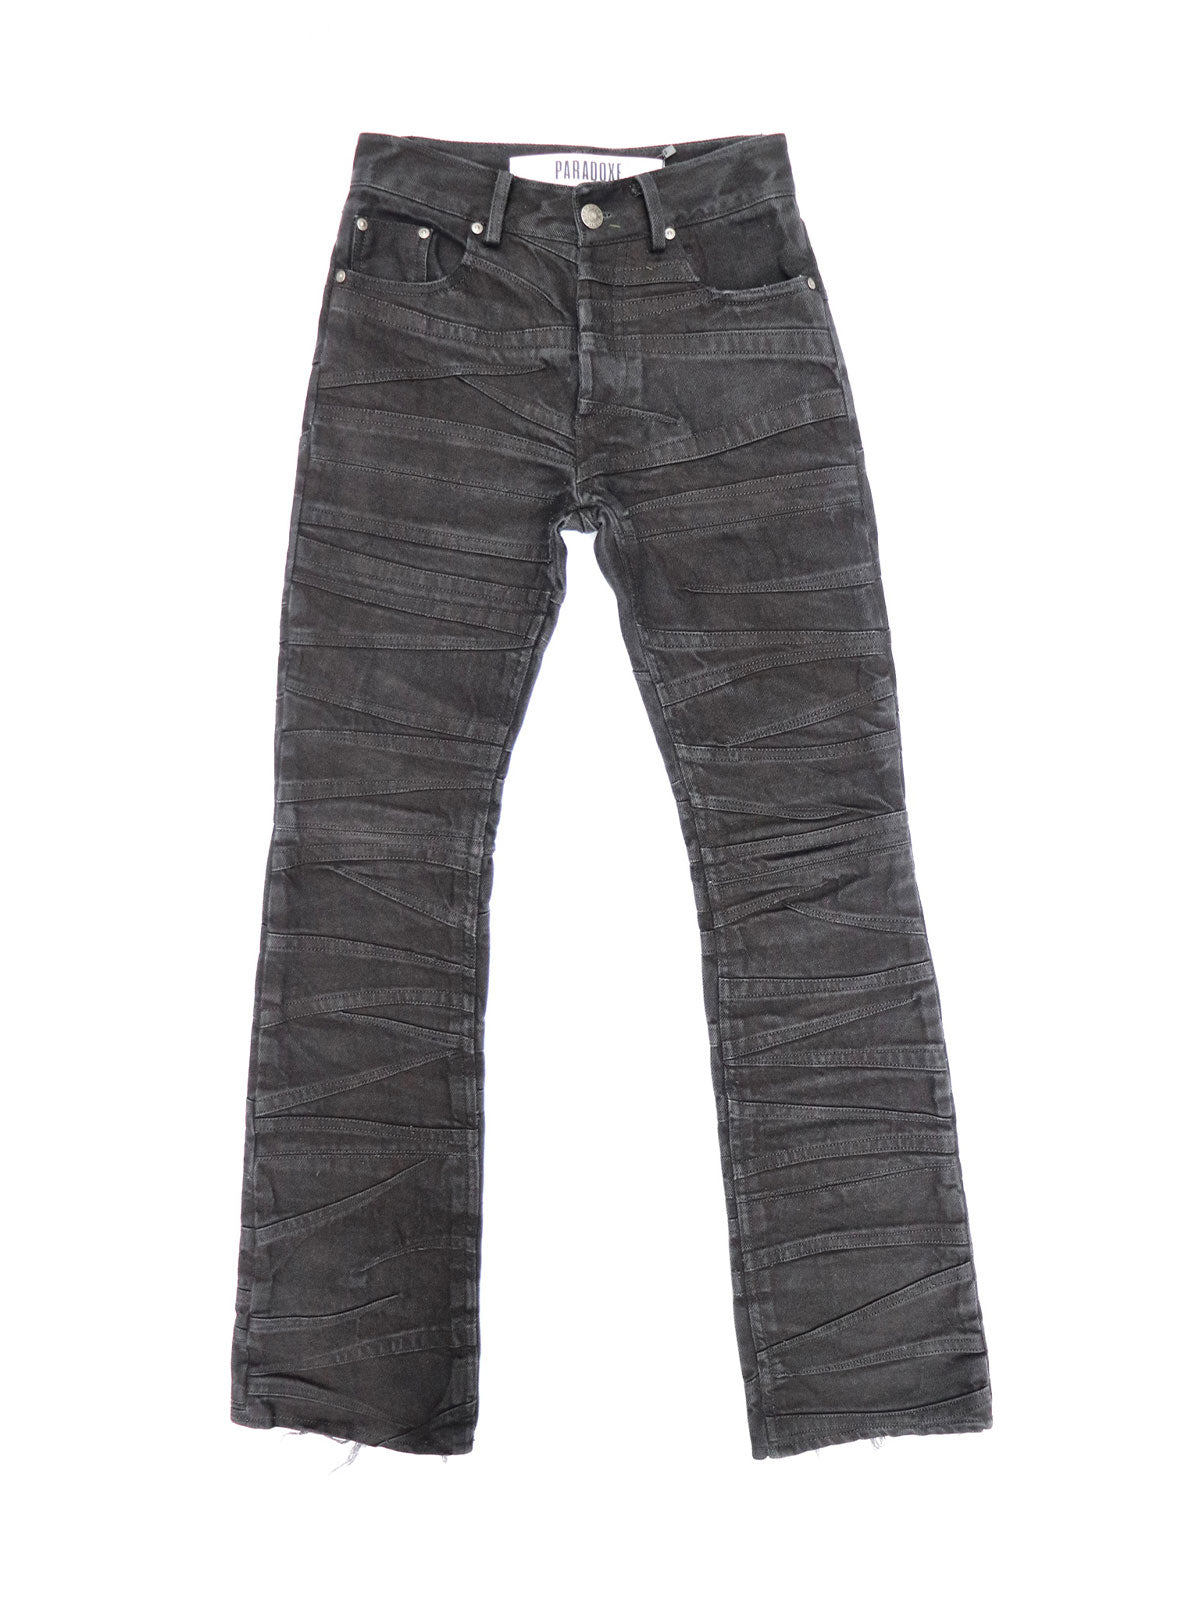 9,680円paradoxe paris jeans